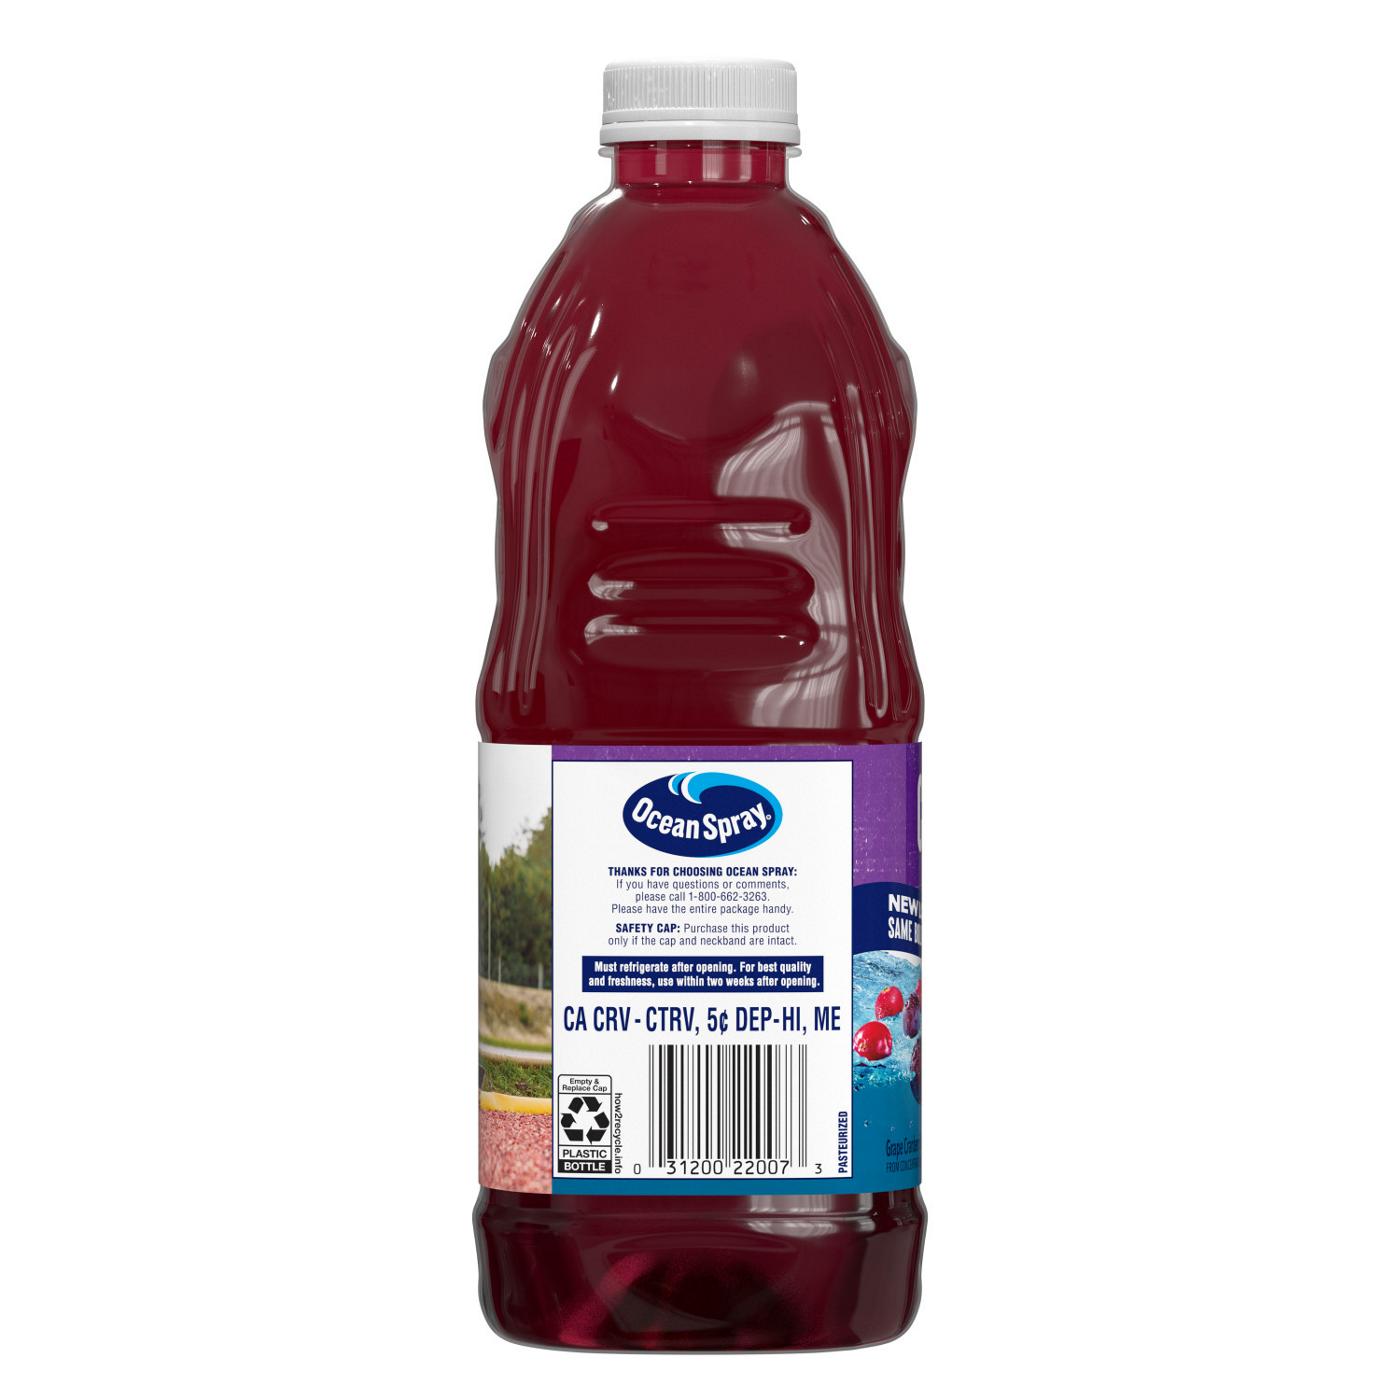 Ocean Spray Cran-Grape Juice Cocktail; image 3 of 6